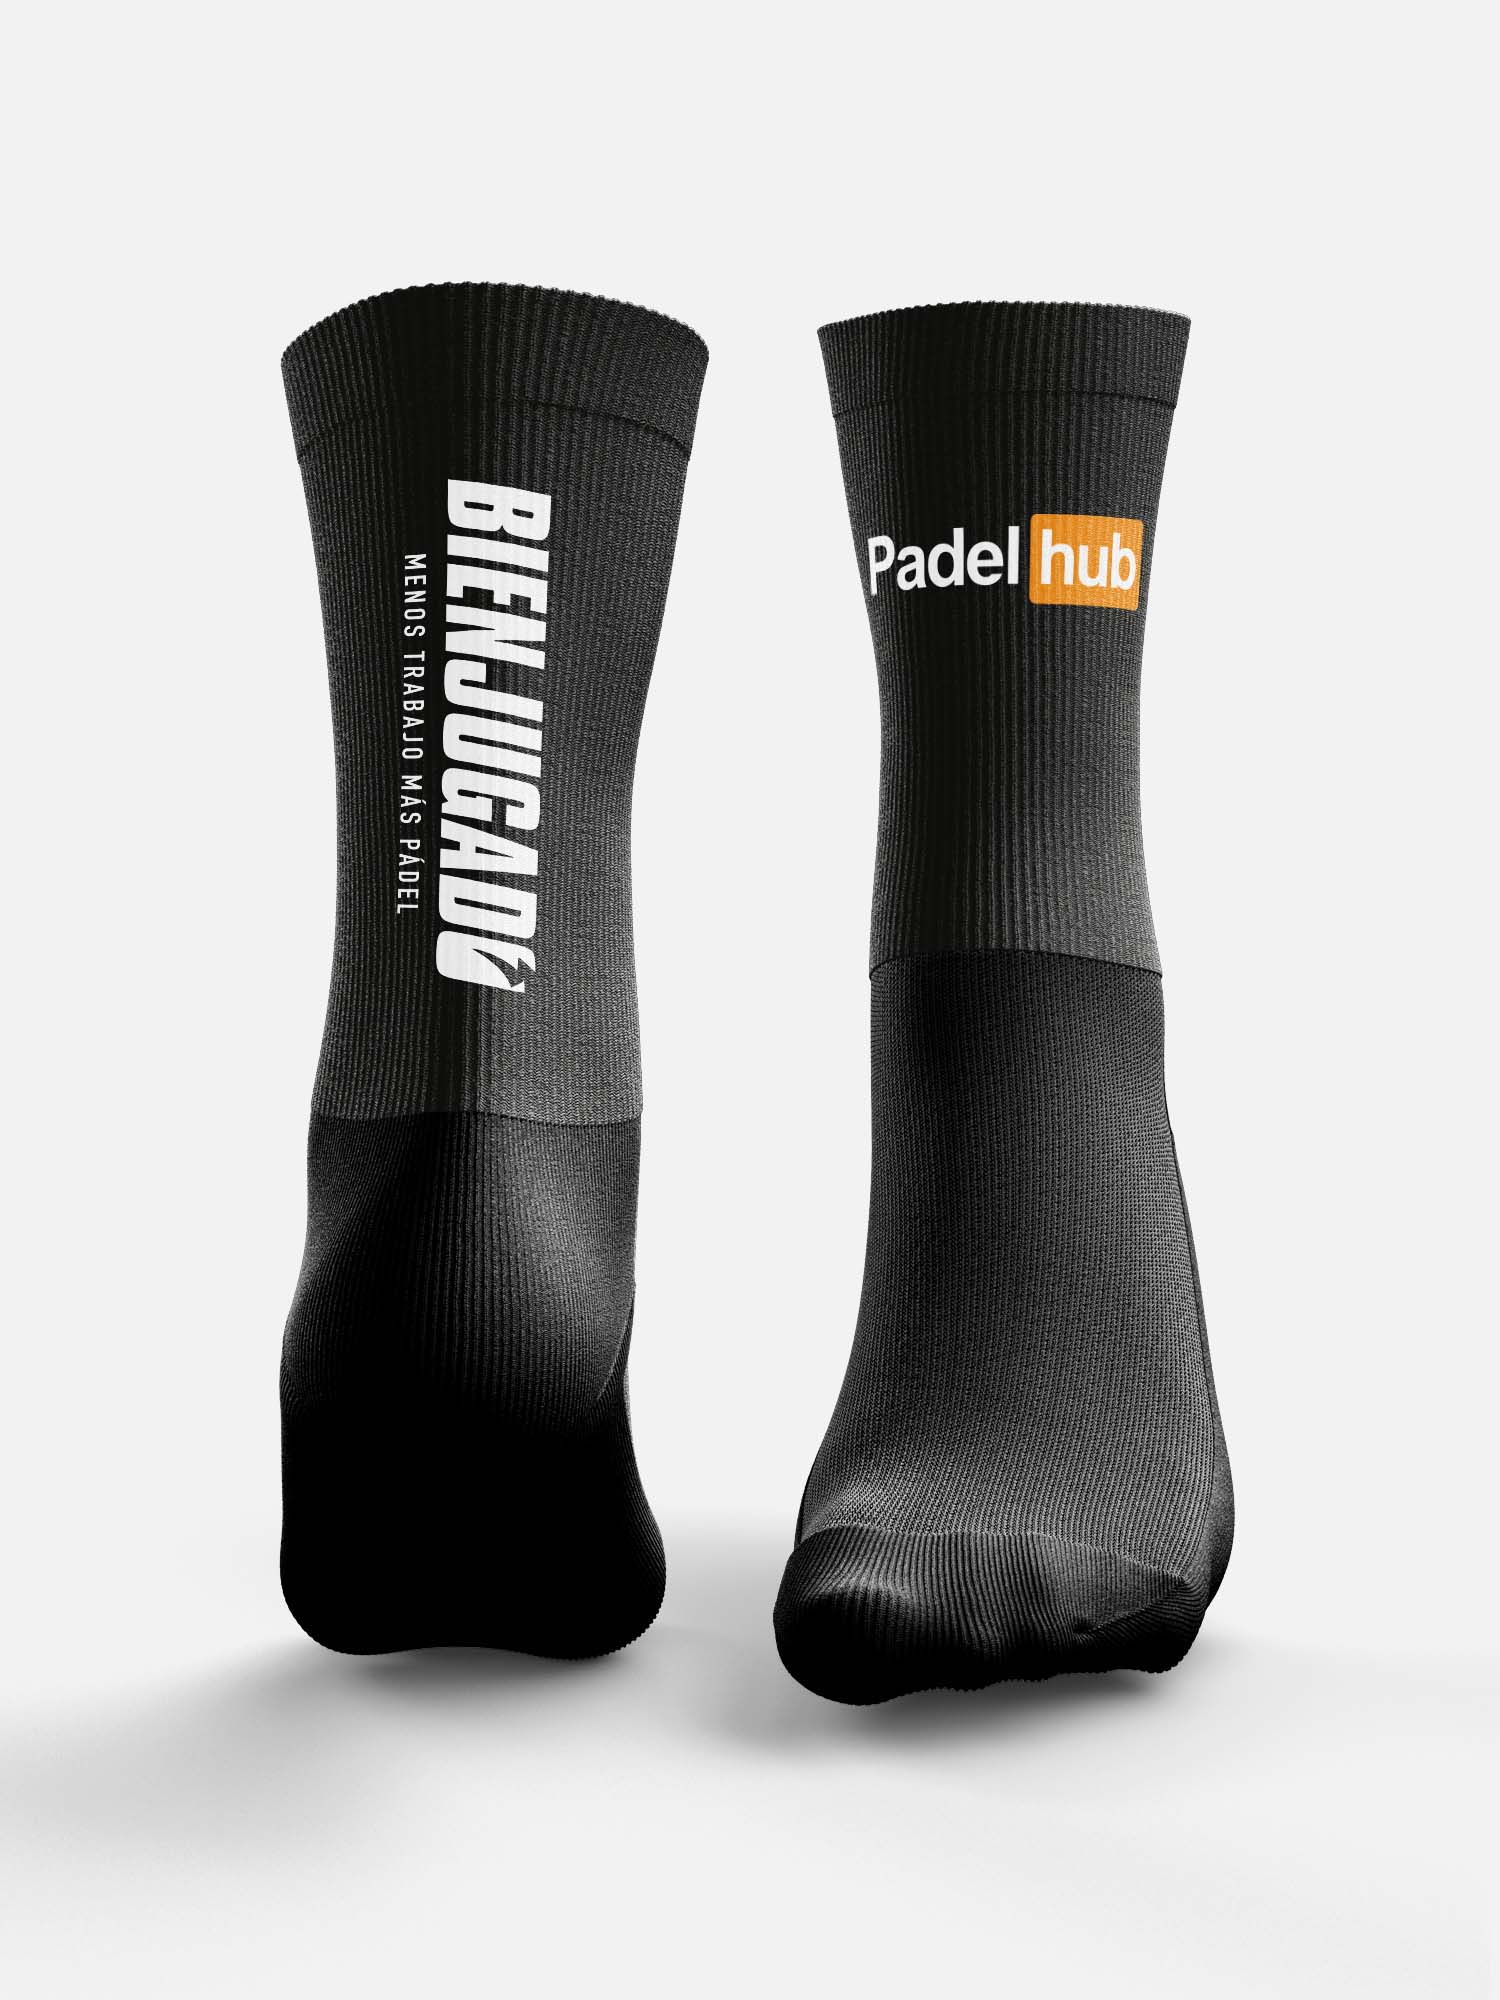 Padel Fun Socks - Padel Hub